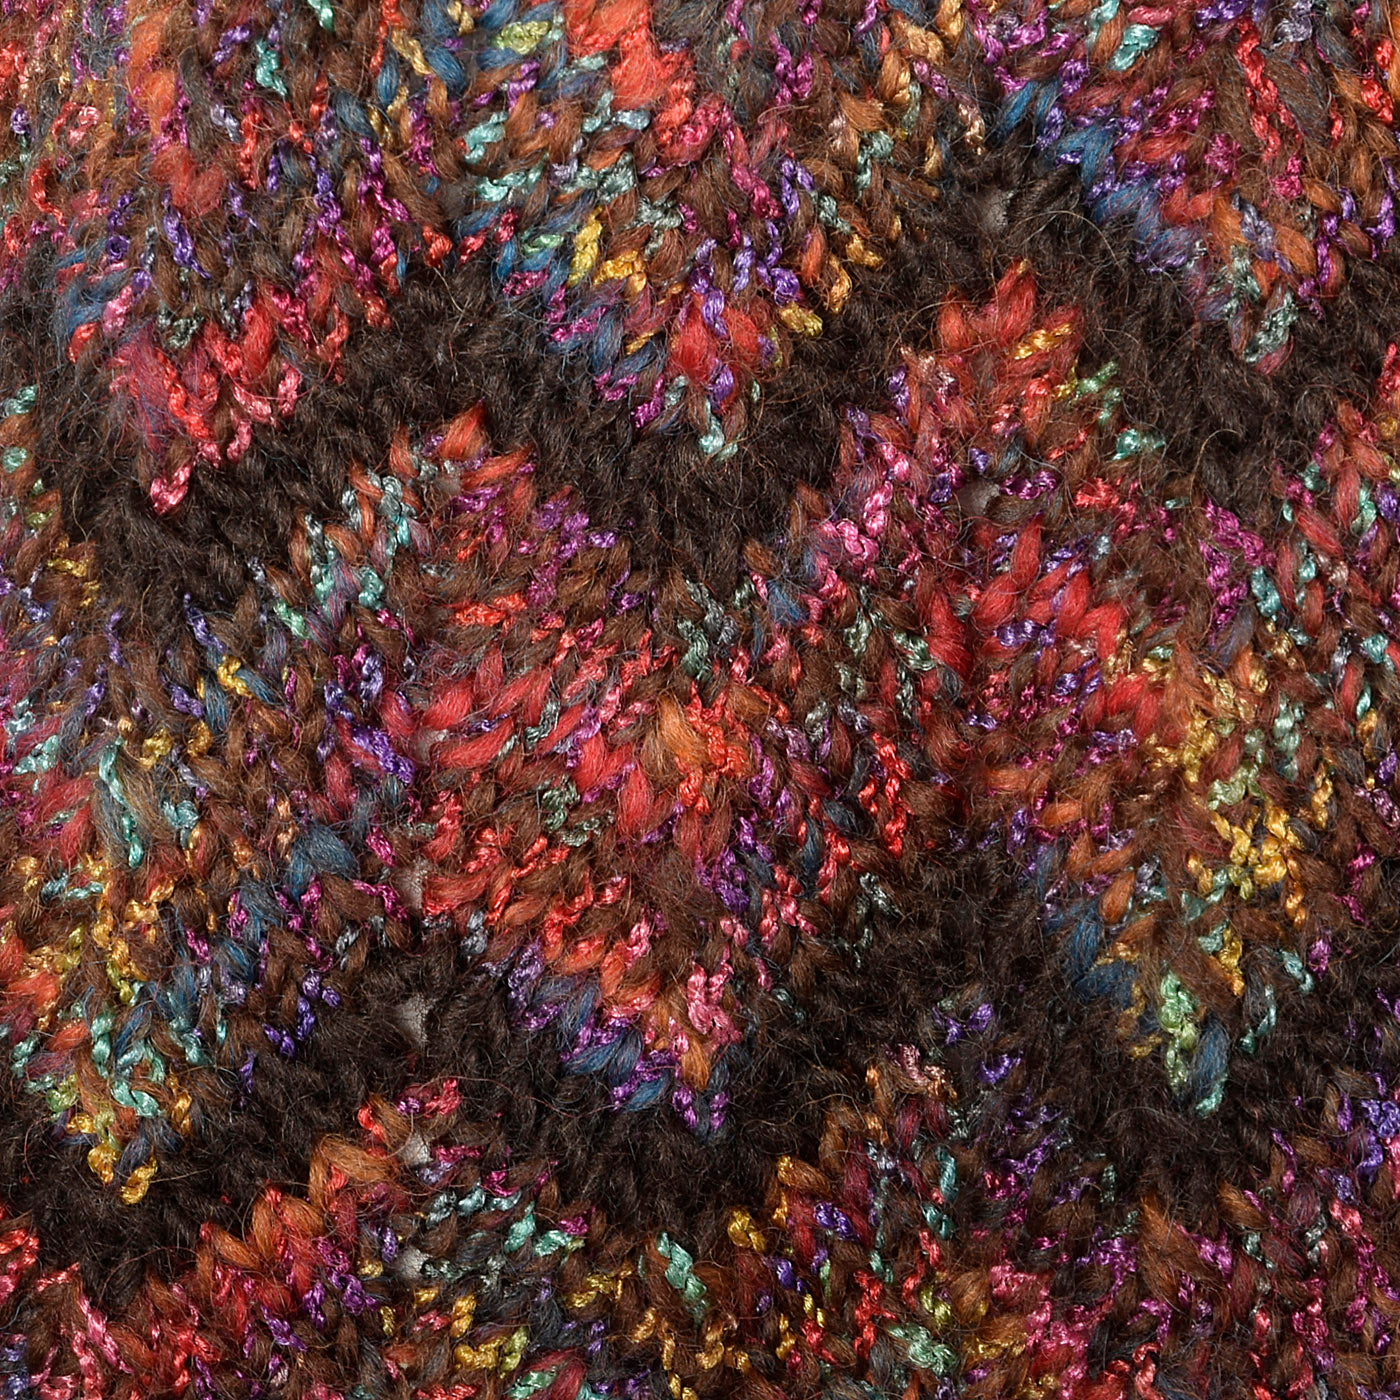 1980s Multicolor Zig Zag Sweater Vest